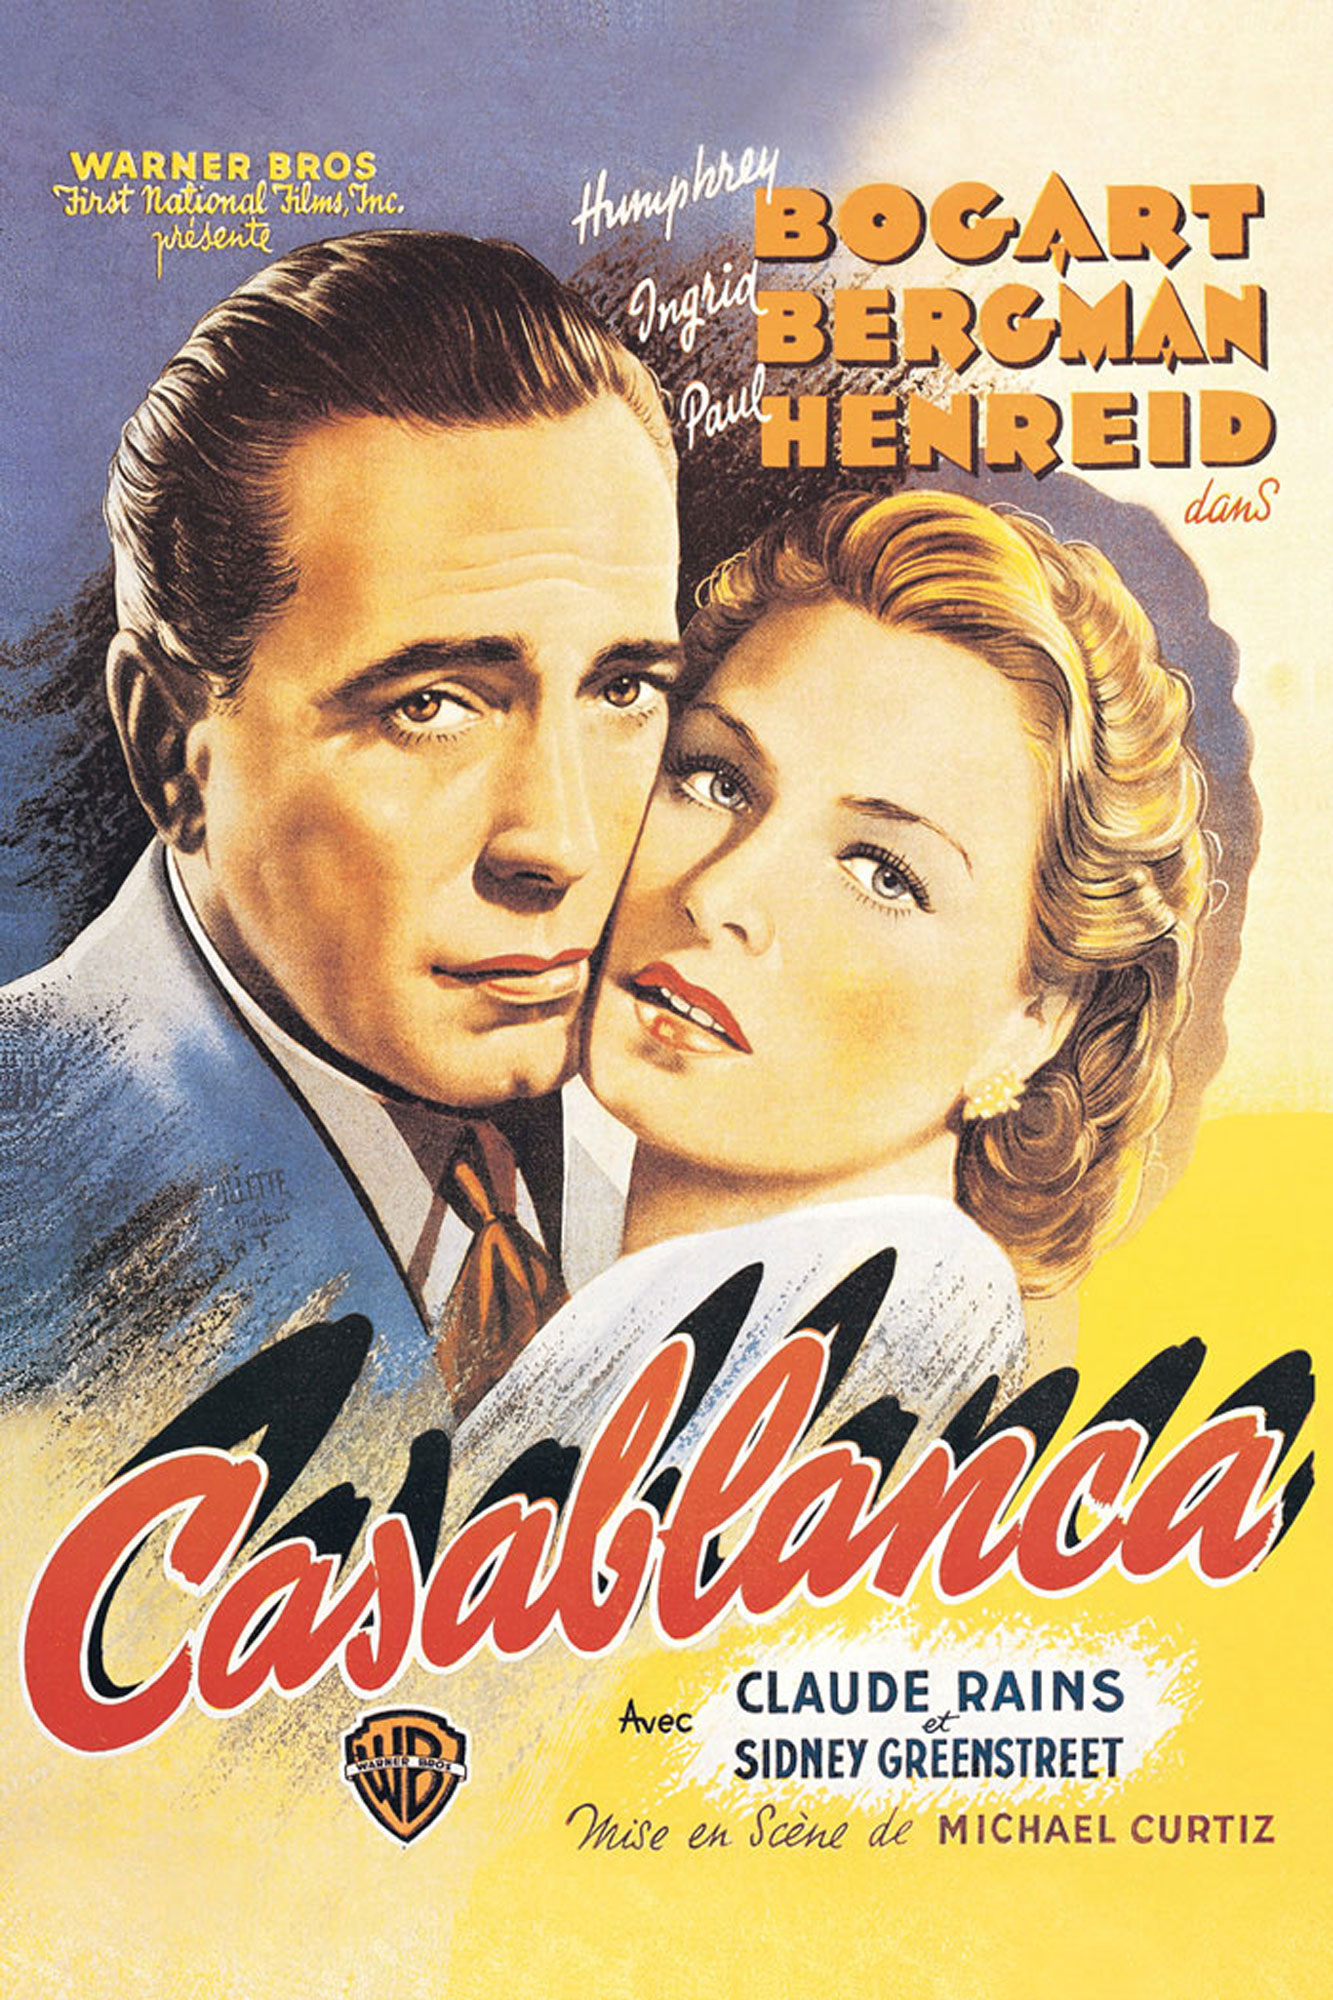 Casablanca - Bogart, Bergman, Henreid